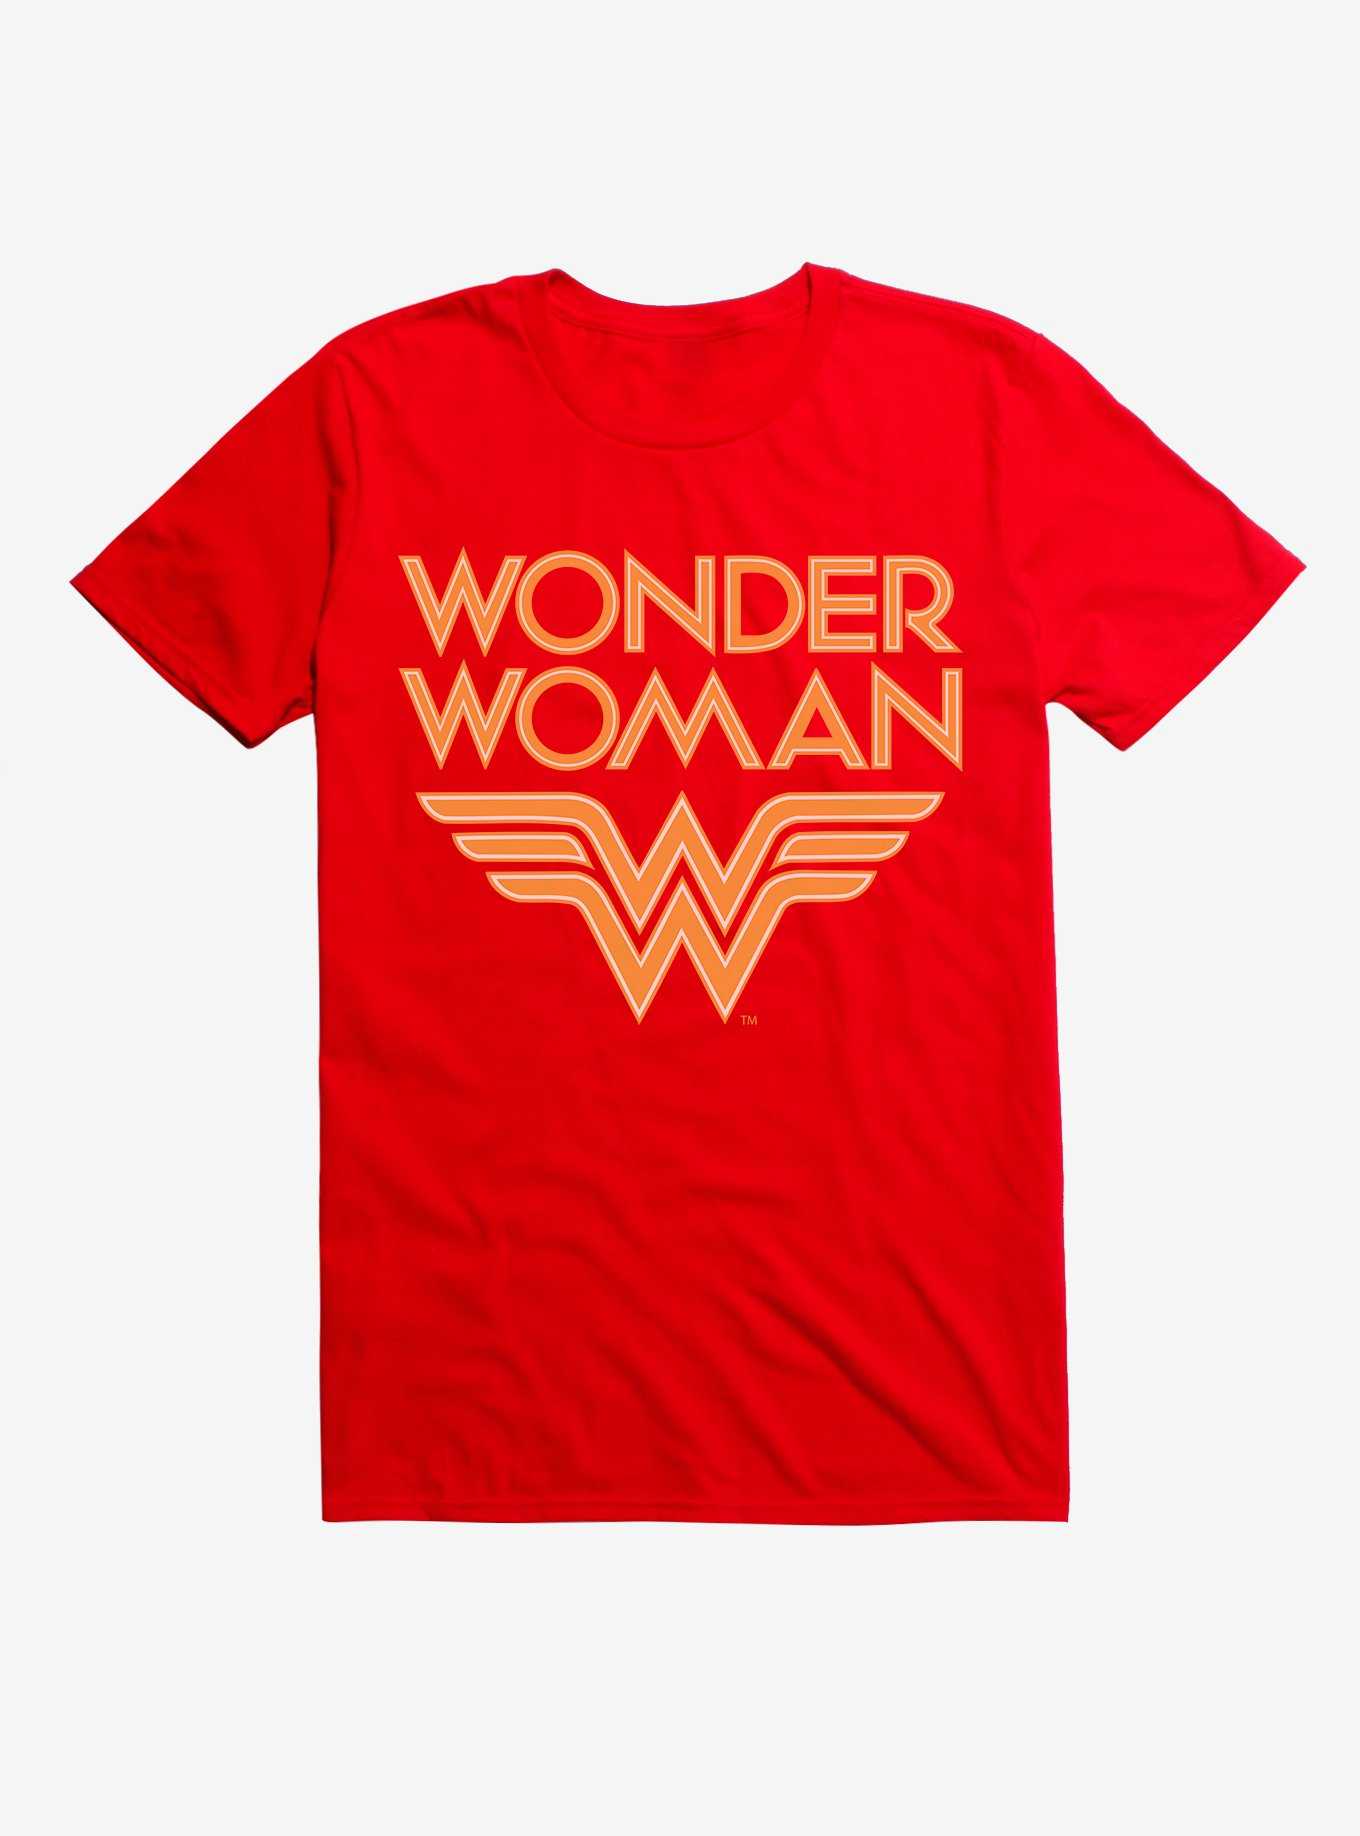 DC Comics Wonder Woman Vintage Wonder Girls Slouchy Sweatshirt - GREY